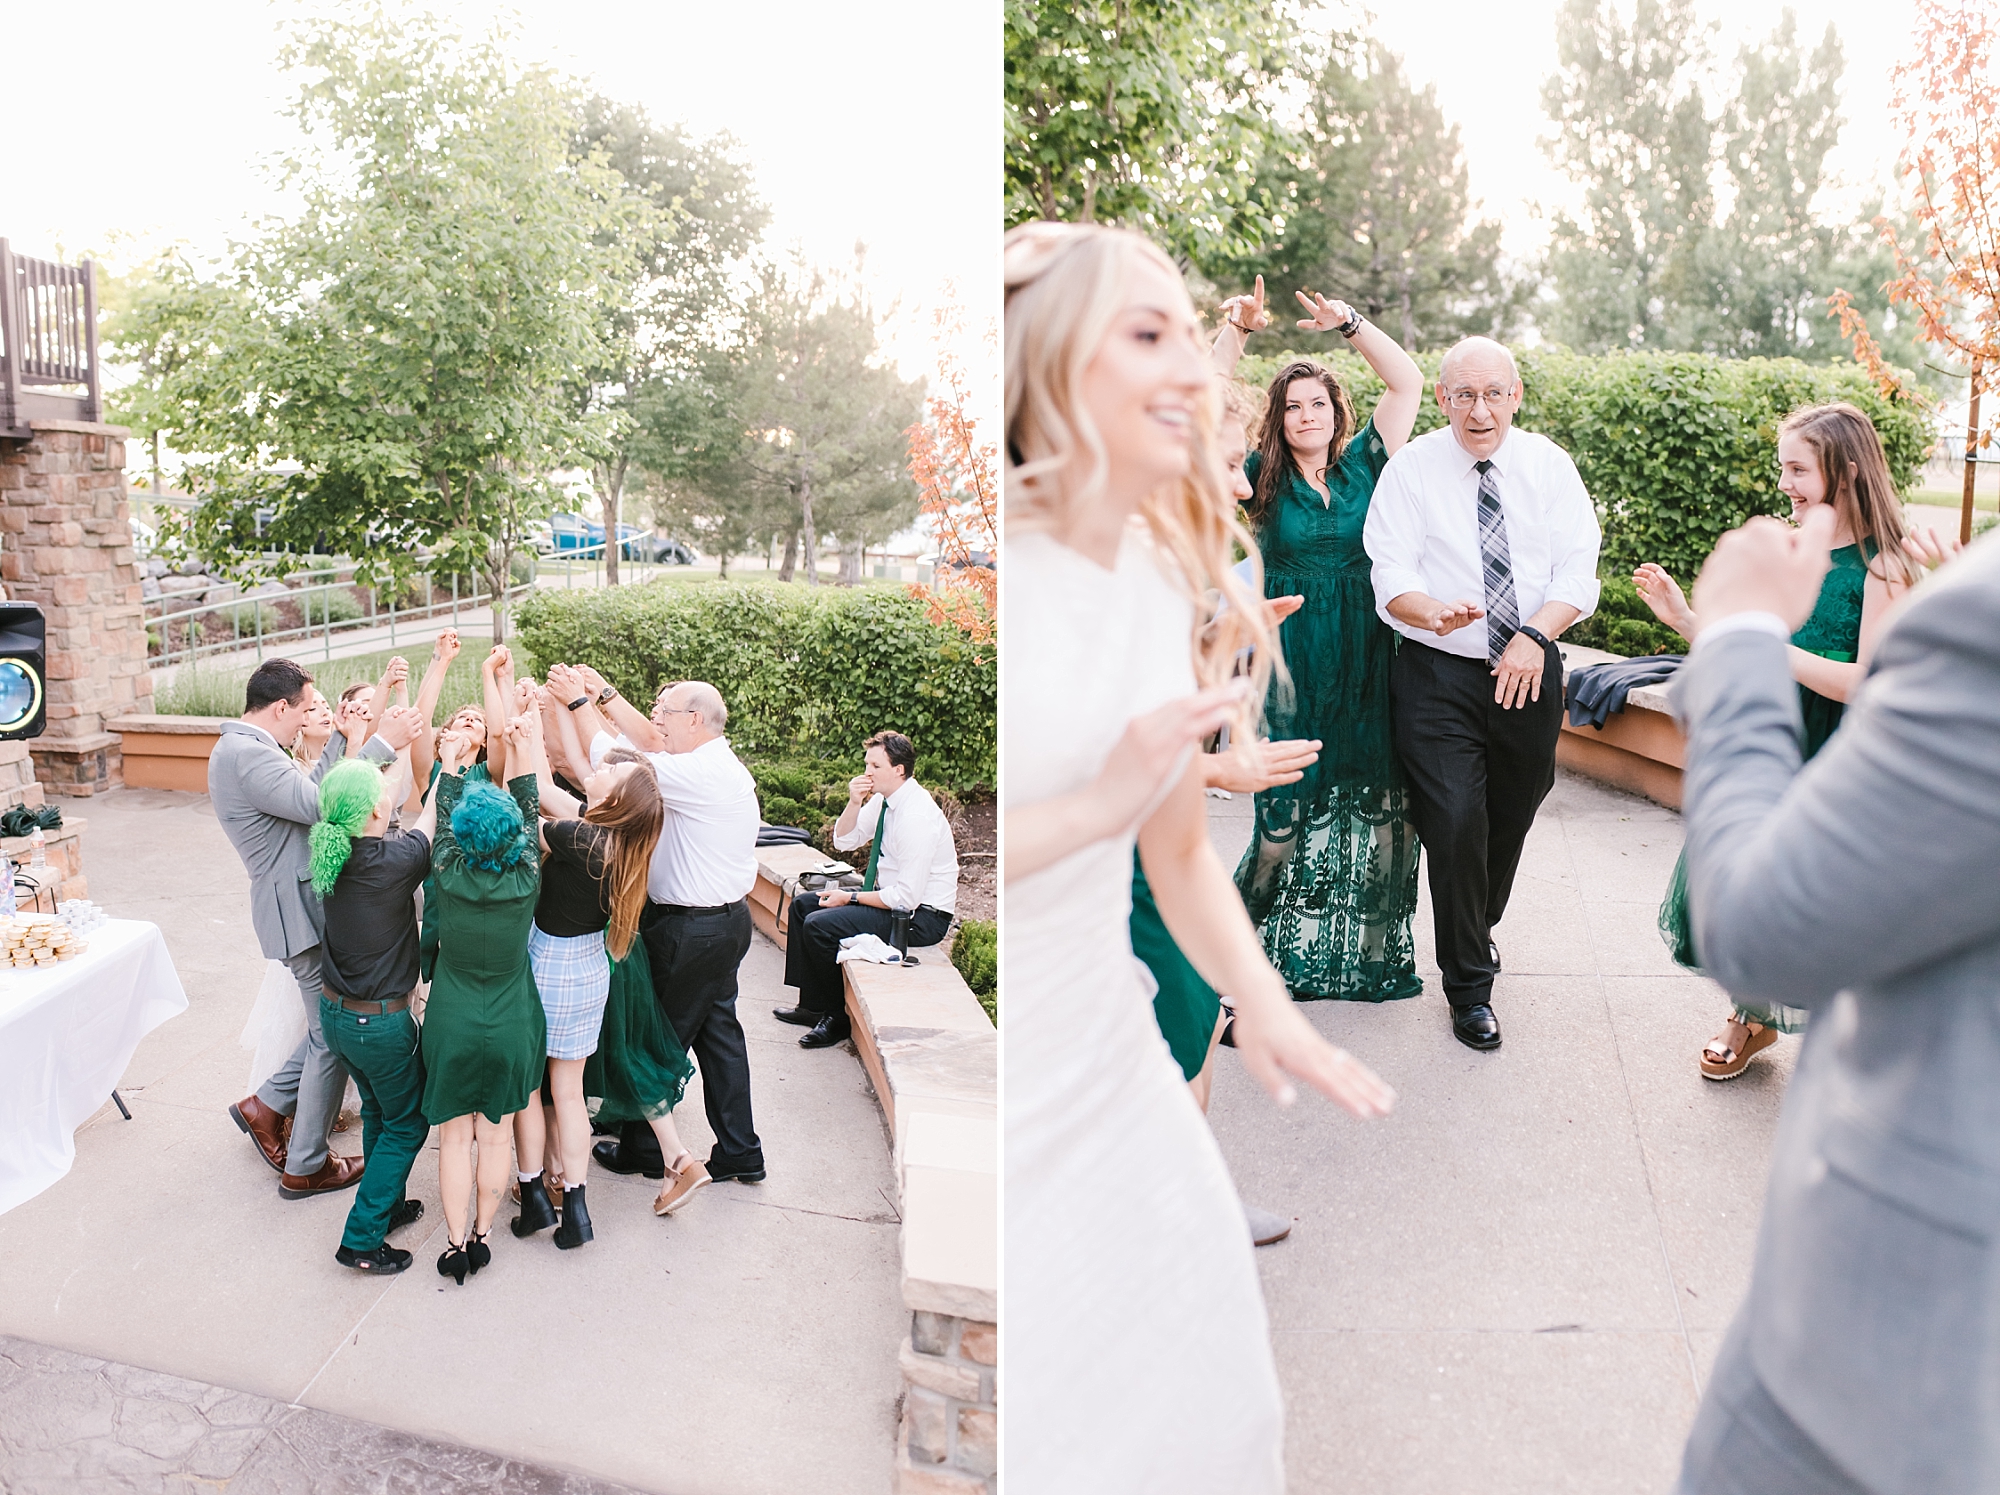 Dance parties at wedding receptions